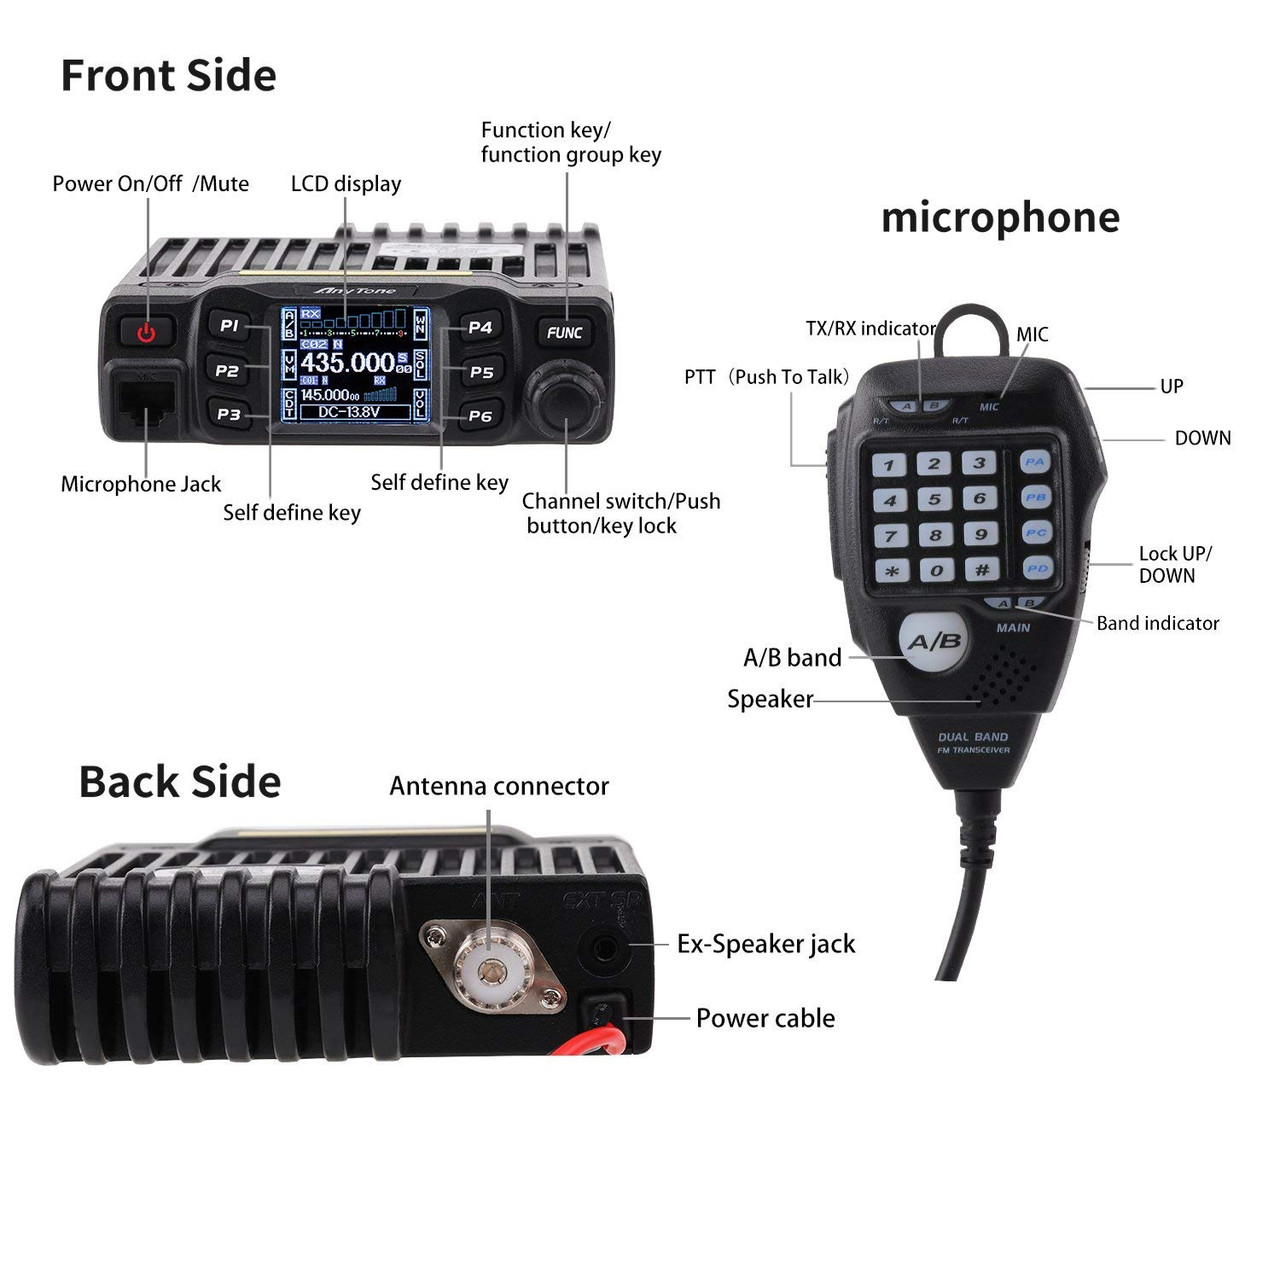 New Anytone AT-778UV Version Dual-Band VHF/UHF 25W Mobile Radio